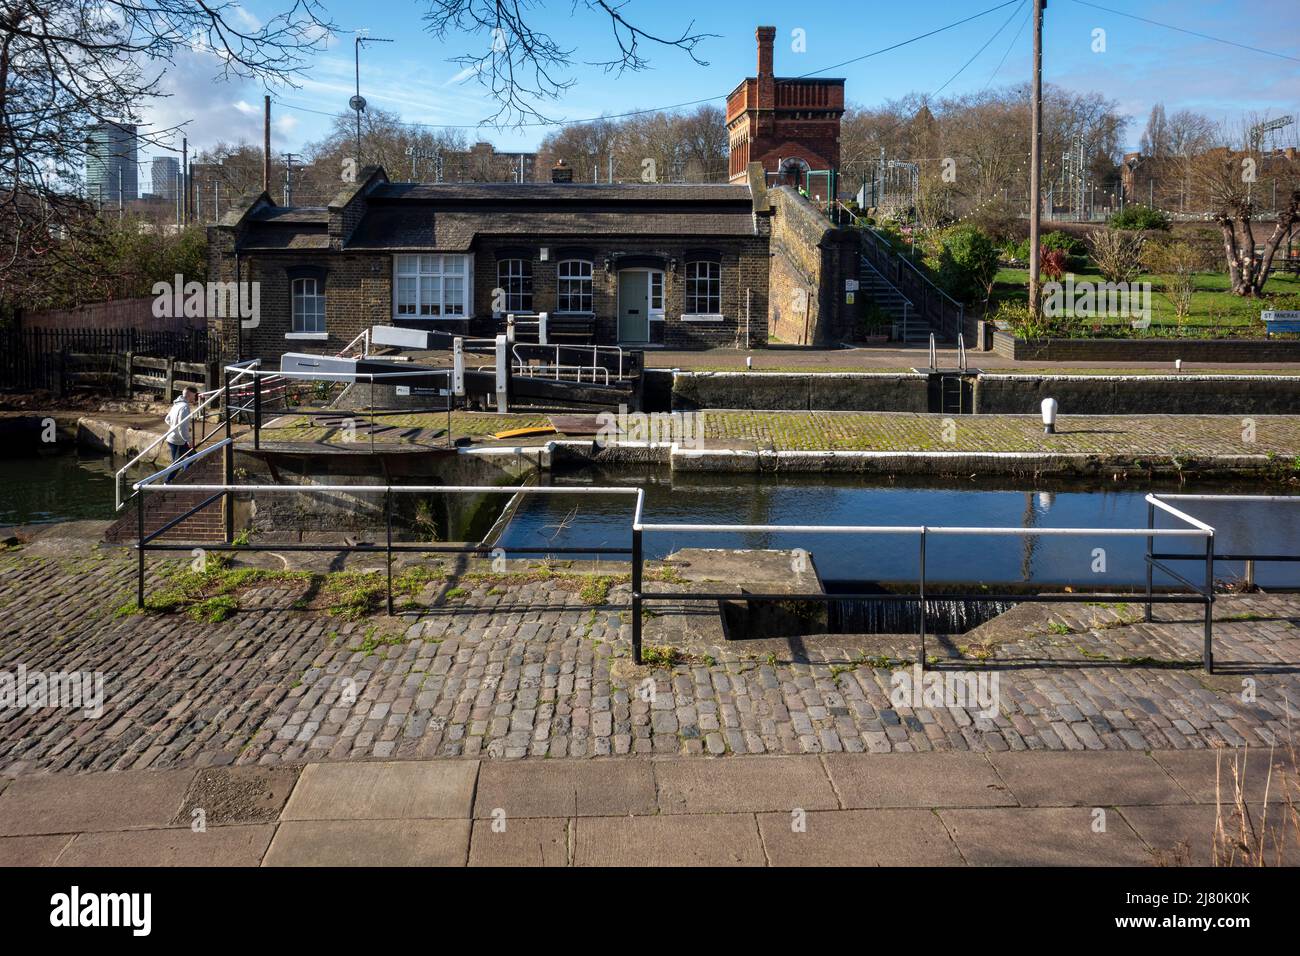 St Pancras Lock, Regent's Canal, Camden, London, UK Stock Photo